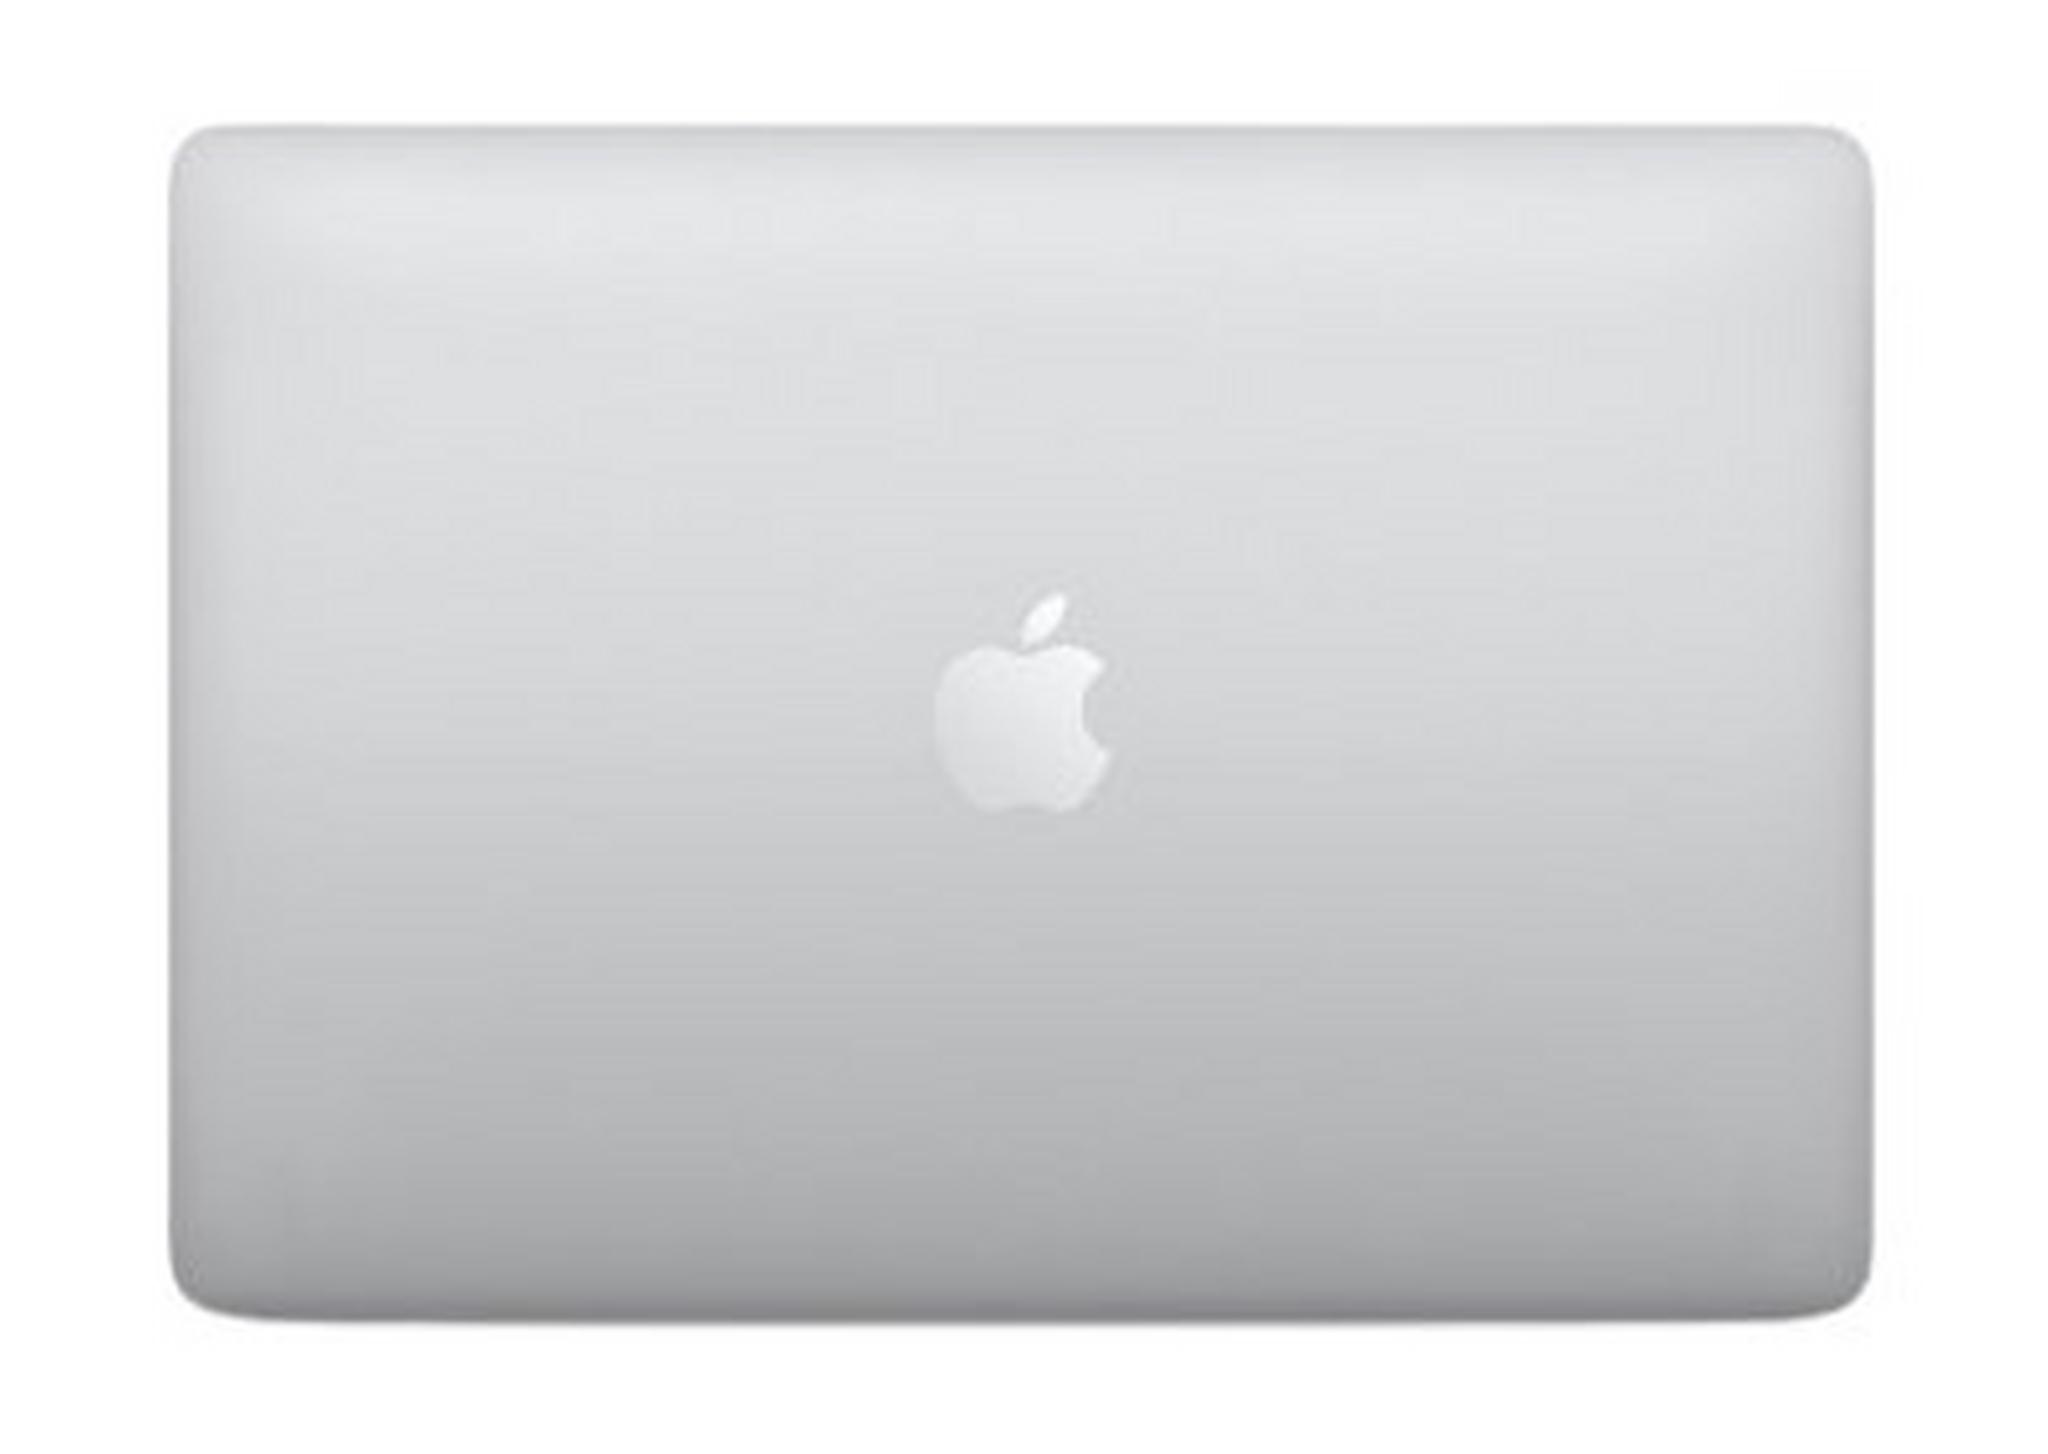 Apple Macbook Pro 8th Gen Core i5 8GB RAM 512GB SSD 13.3-inch Laptop (MXK72AB/A) - Silver